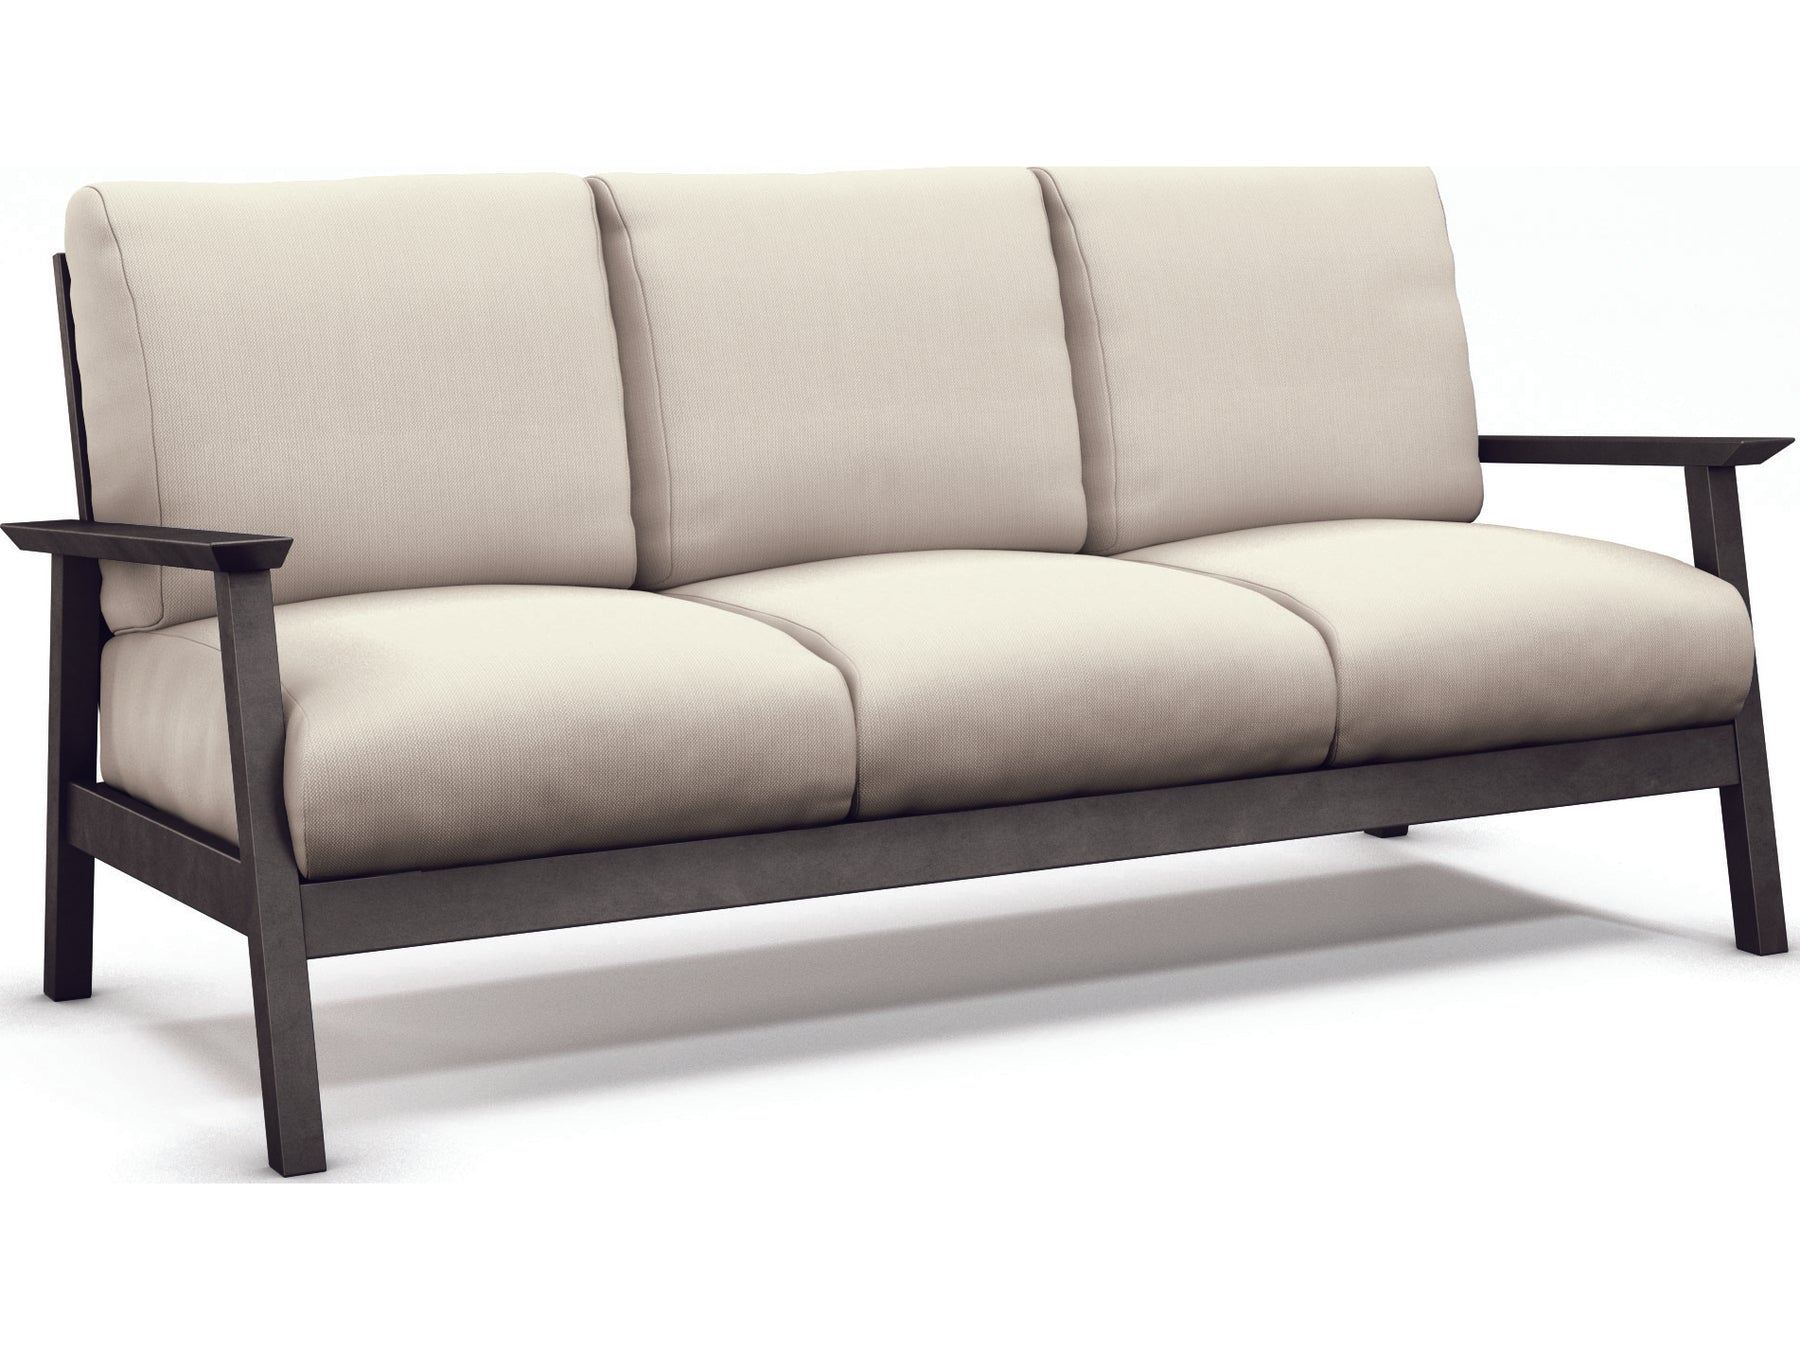 Homecrest Revive Dreamcore Cushion Aluminum Sofa